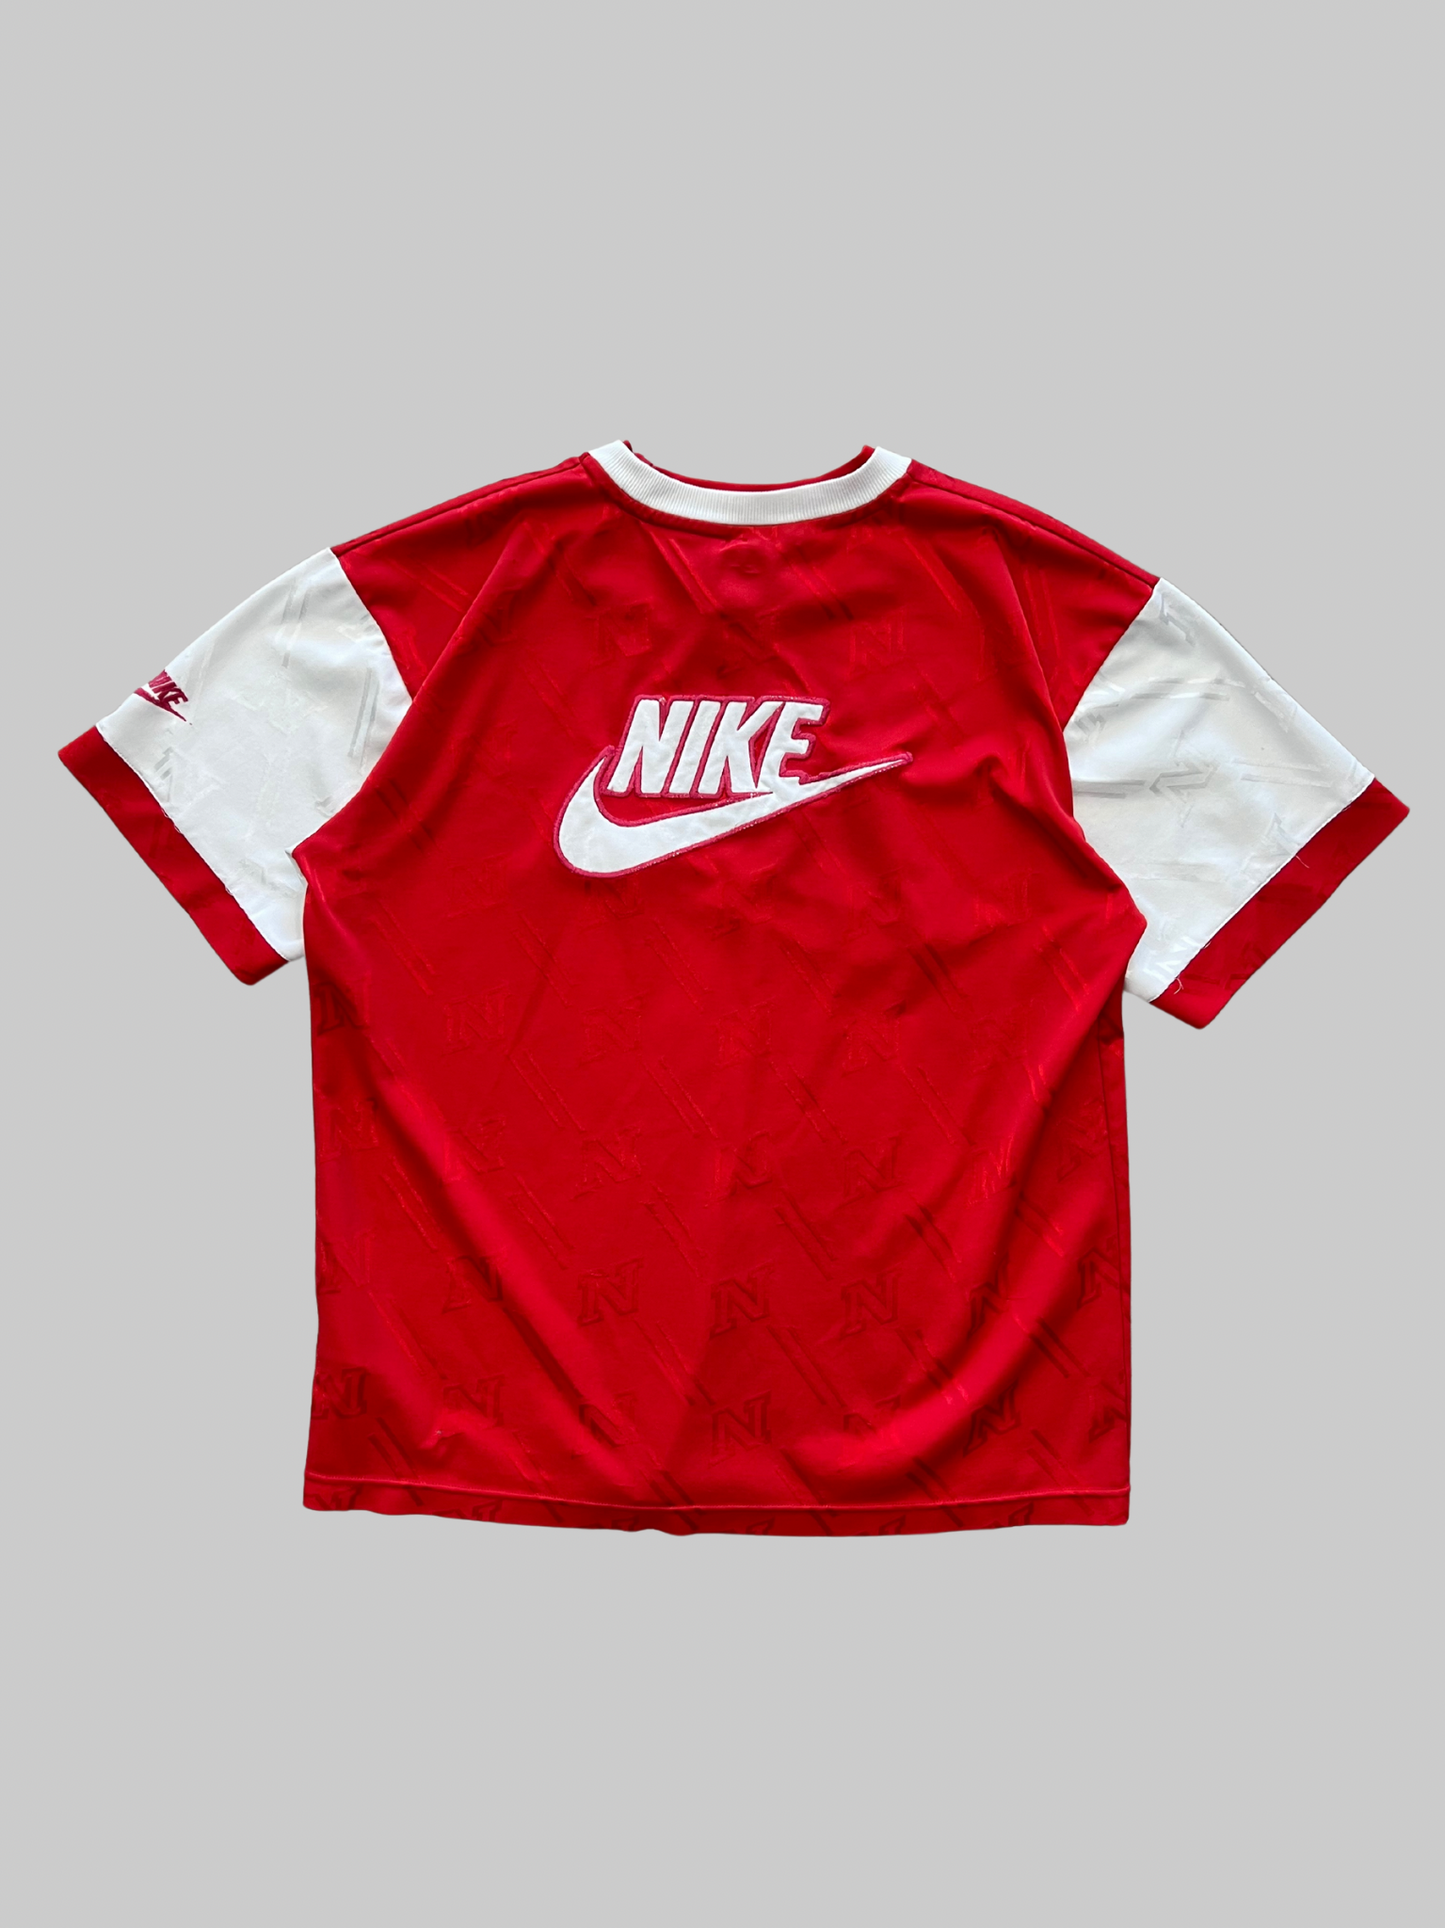 Red 90s Bootleg Nike Jersey (XL)